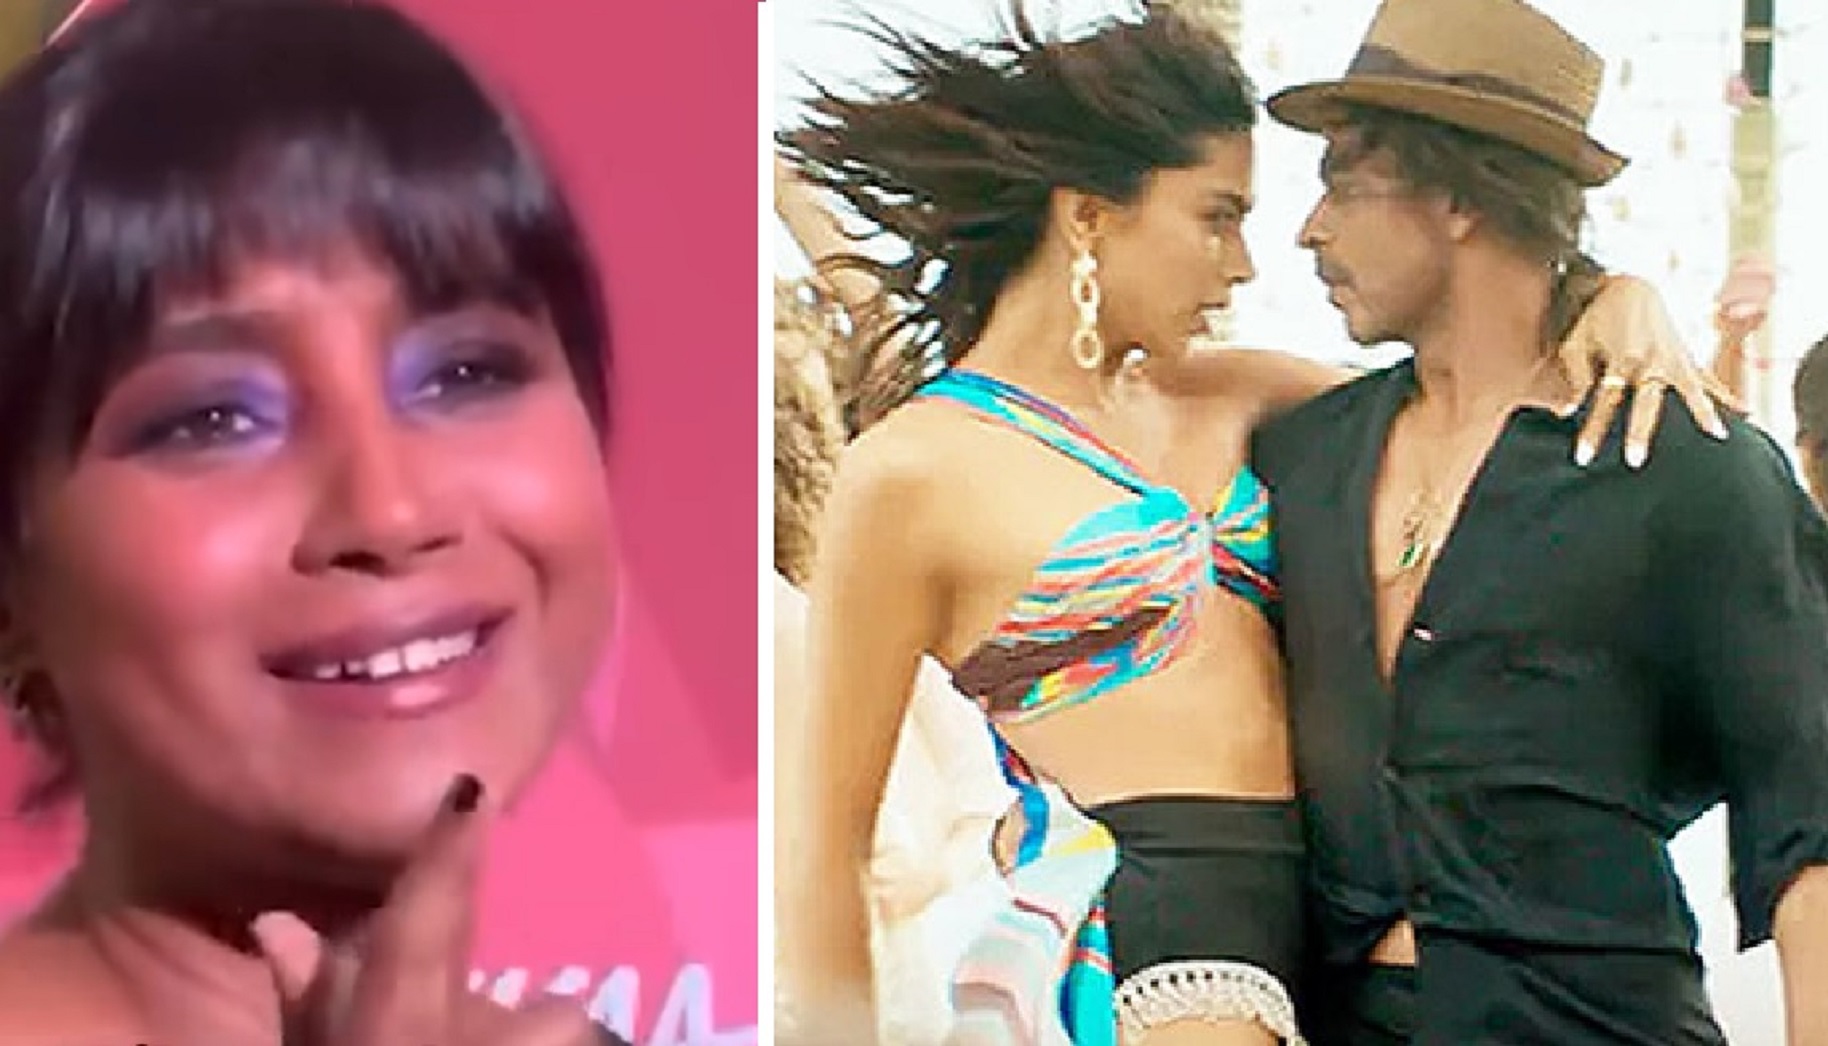 Besharam Rang Singer Shilpa Rao Forgets First Line Of Her Own Song – ‘Pehli line Kya hain yaar?’